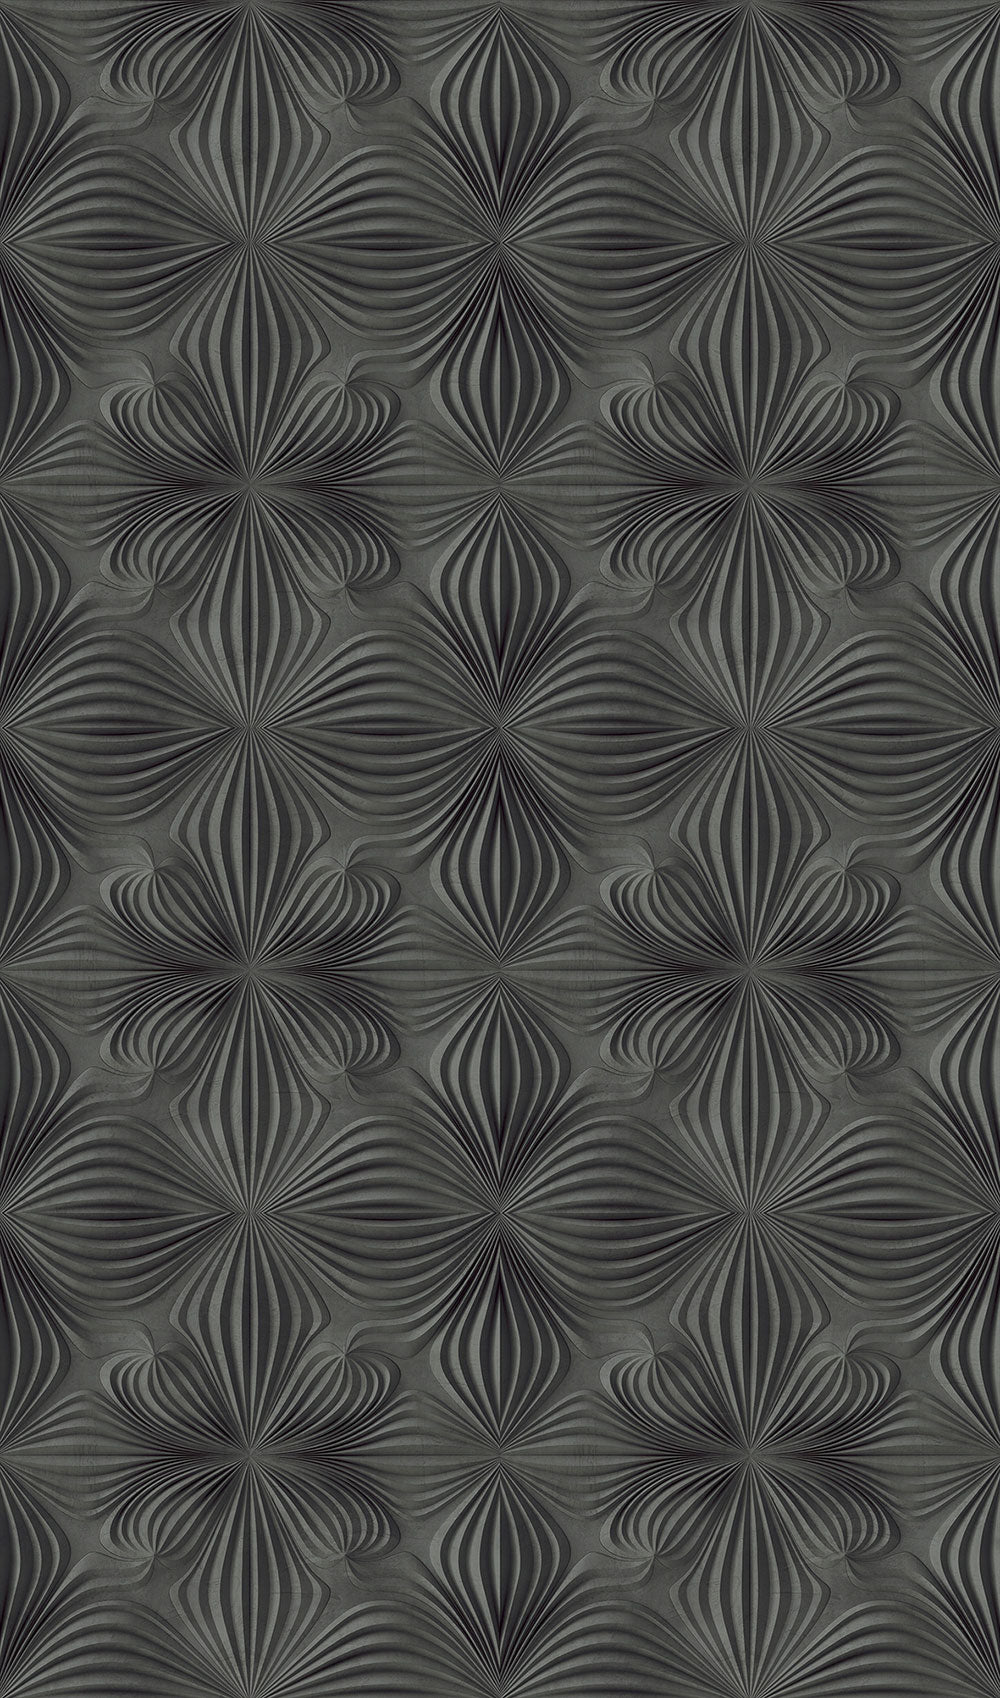 Smart Art Easy - Geometric Illusion smart walls Marburg Charcoal   47230